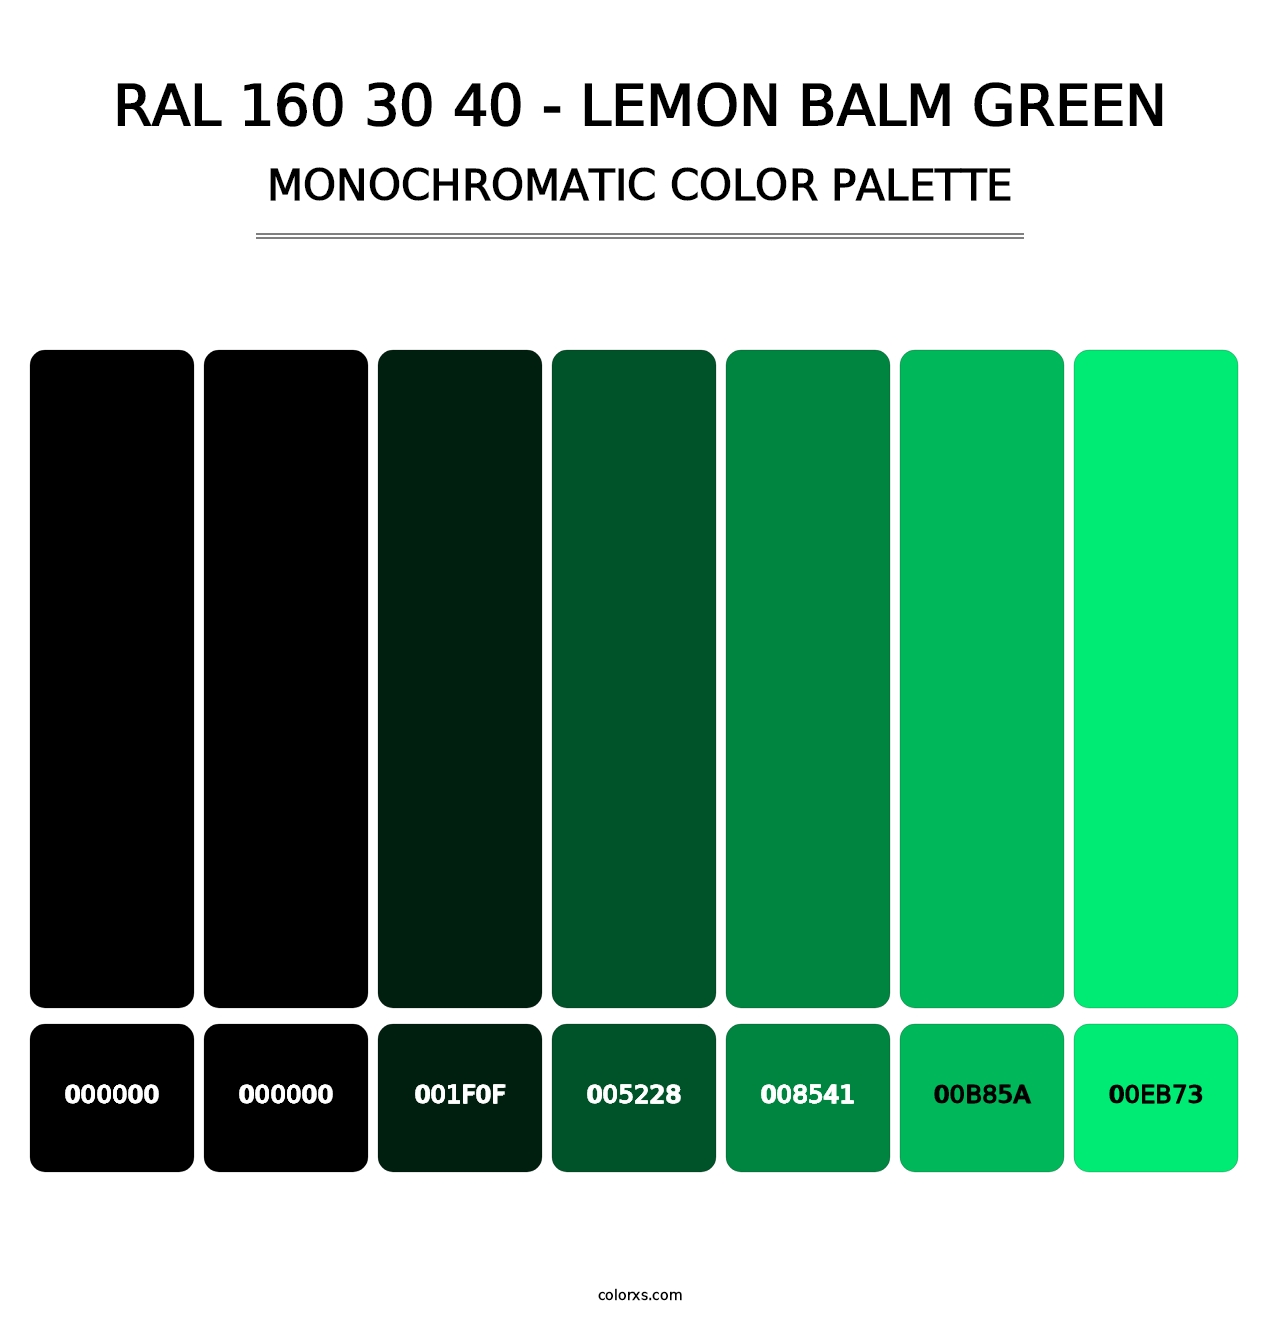 RAL 160 30 40 - Lemon Balm Green - Monochromatic Color Palette